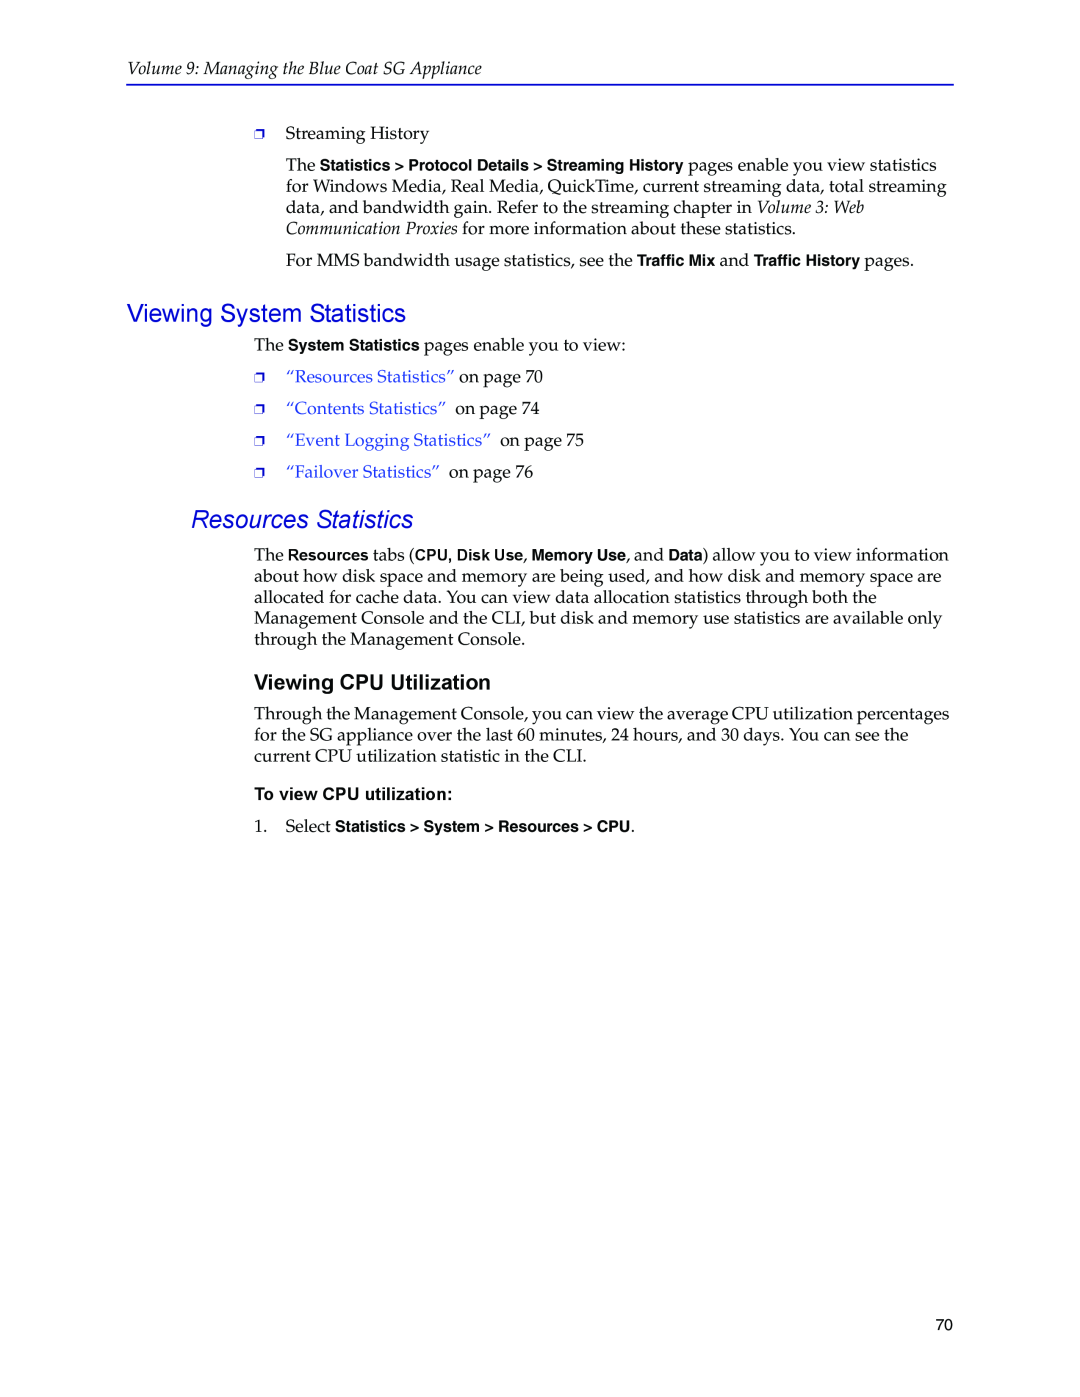 Blue Coat Systems SGOS Version 5.2.2 manual Viewing System Statistics, Resources Statistics, Viewing CPU Utilization 